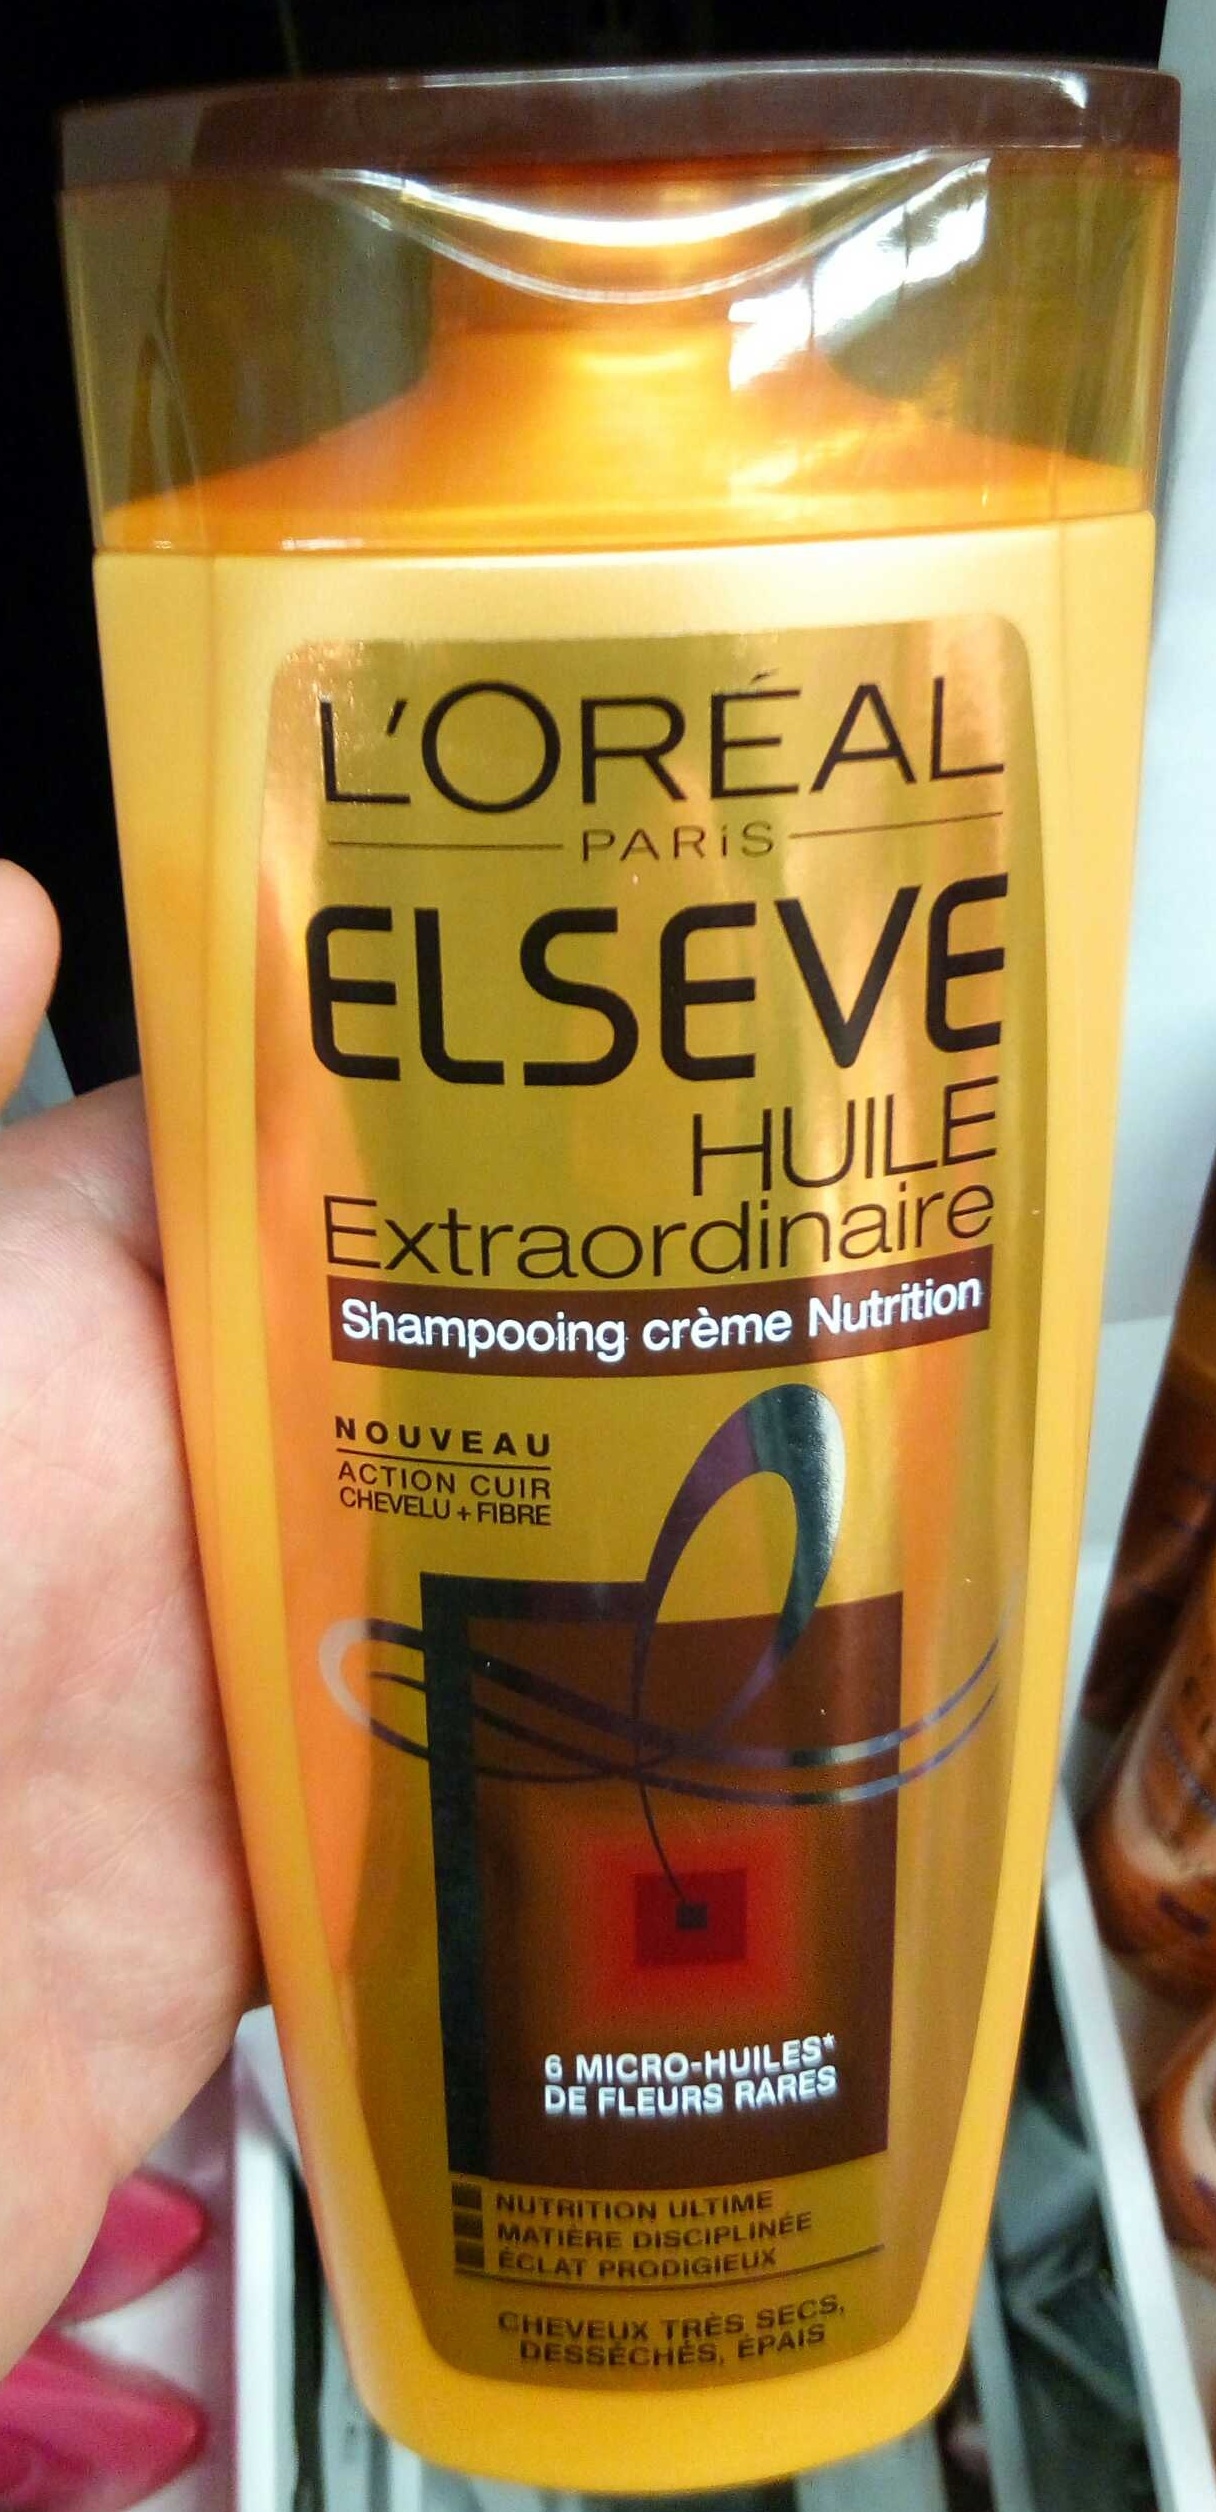 Elseve Huile Extraordinaire Shampooing crème nutrition - Product - fr